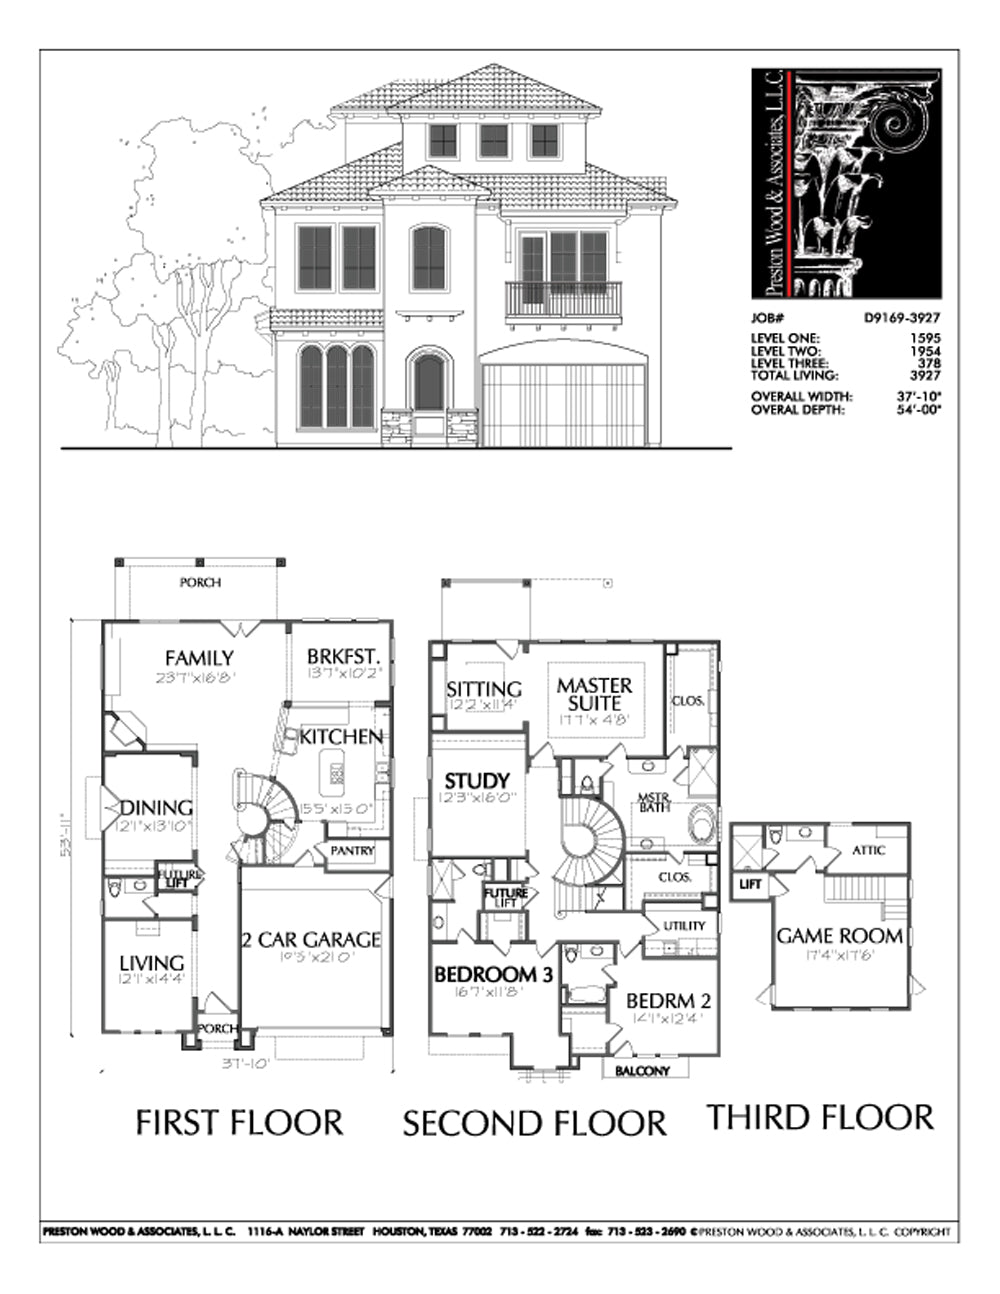 New Floor  Plans  for 3 Story  Homes  Residential  House  Plan  